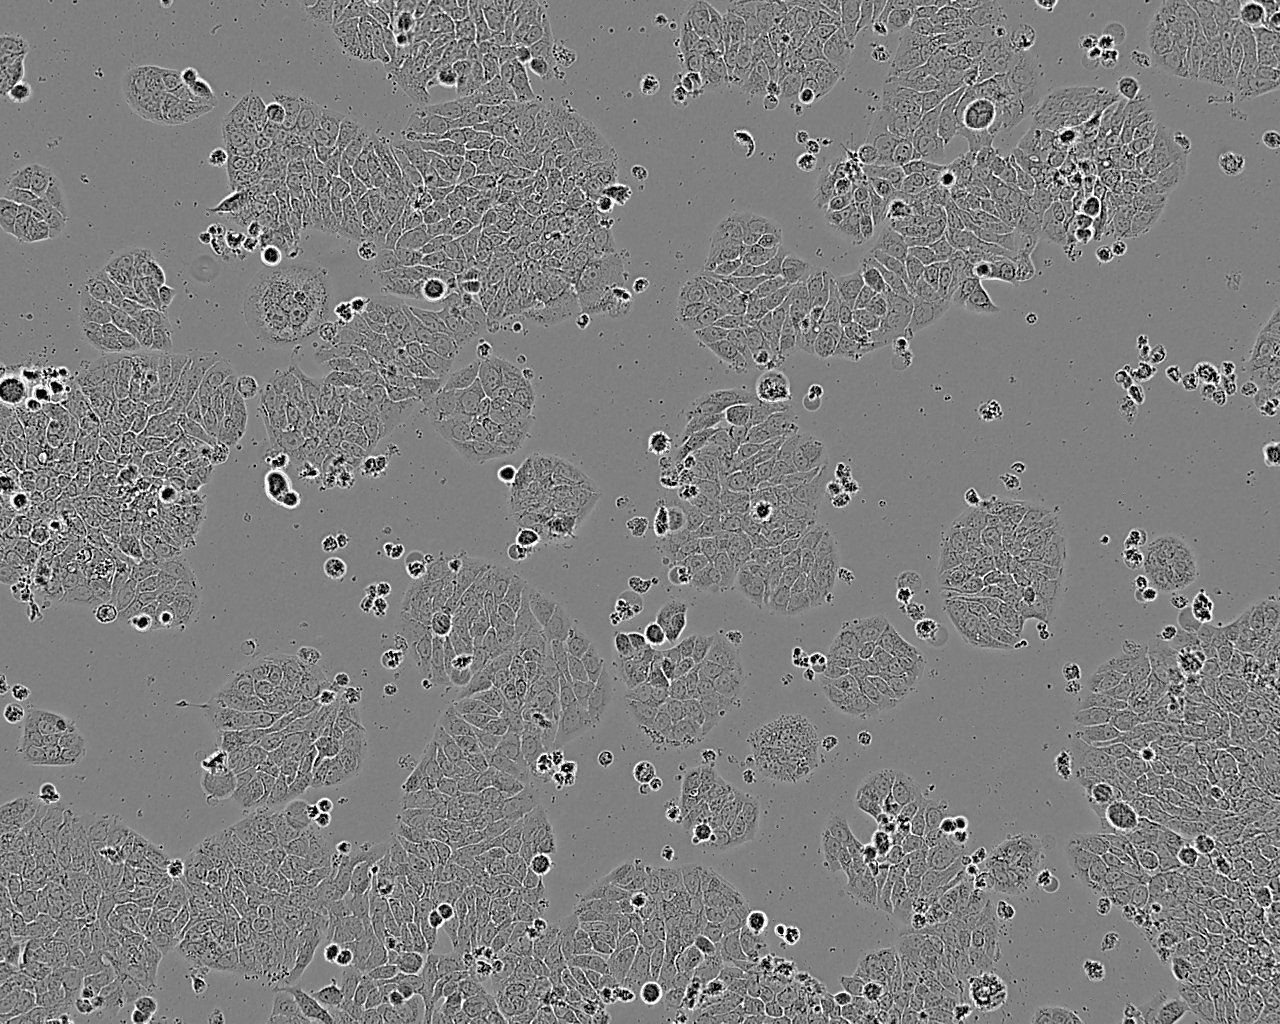 PG-4 (S+L-) epithelioid cells猫星形脑胶质细胞系